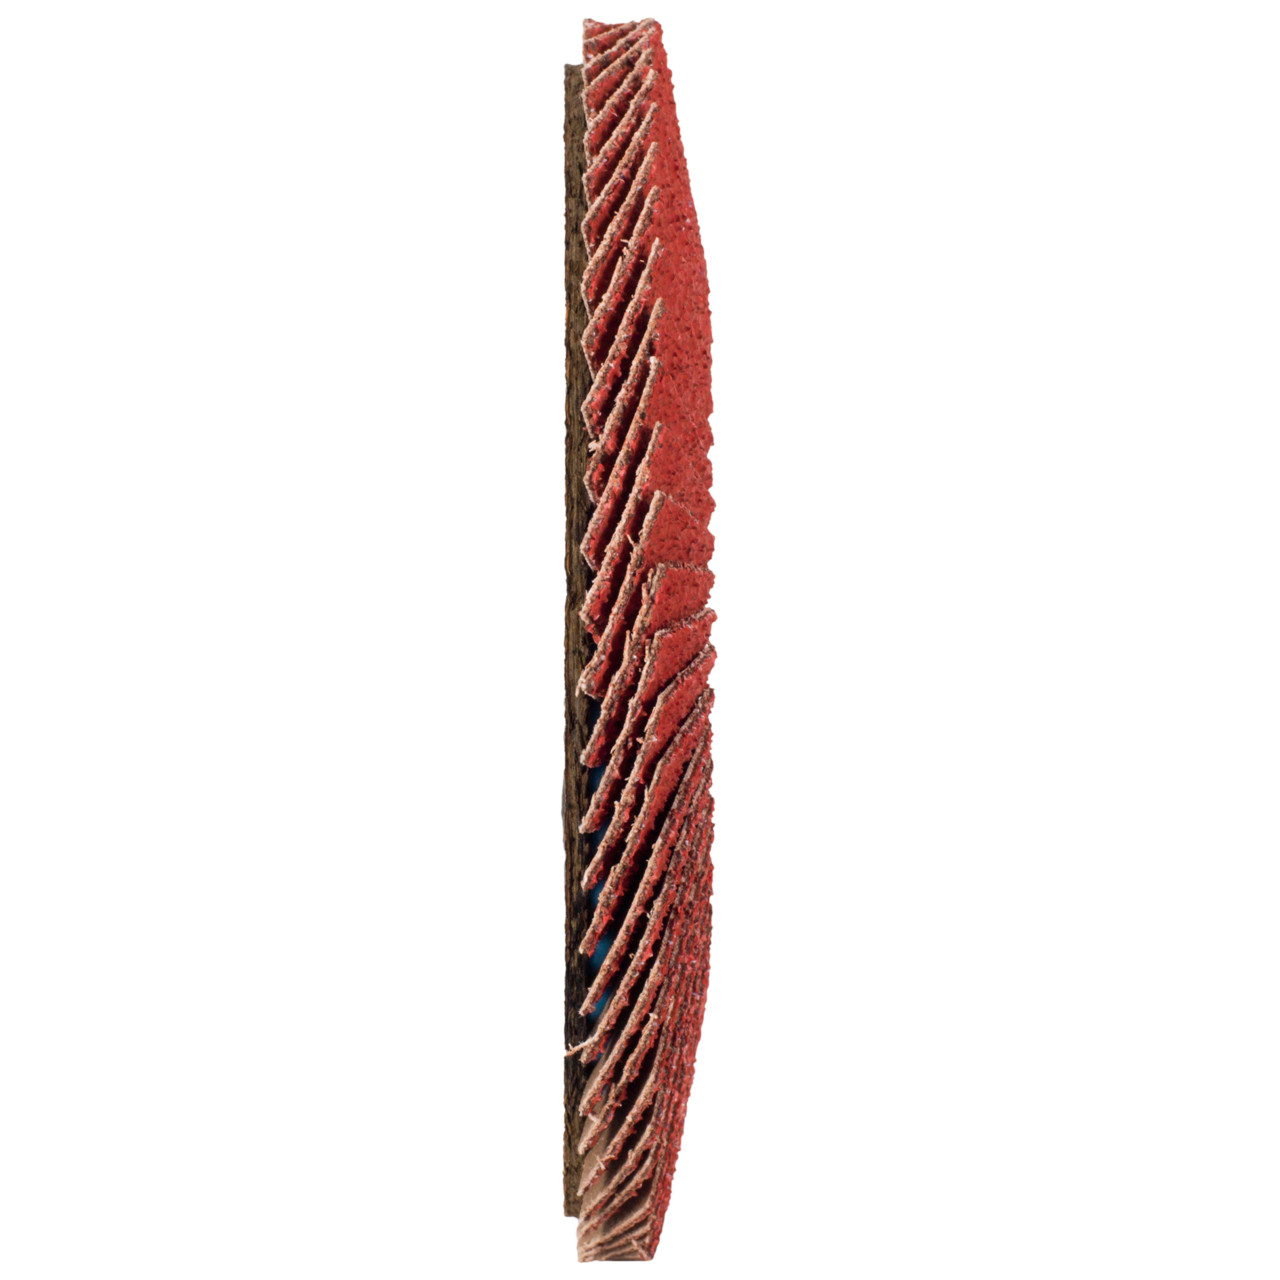 Tyrolit Gekartelde borgring DxH 115x22,23 CERABOND gekartelde borgring voor roestvrij staal, P60, vorm: 27A - slingerontwerp (glasvezeldragerhuisontwerp), Art. 34043515